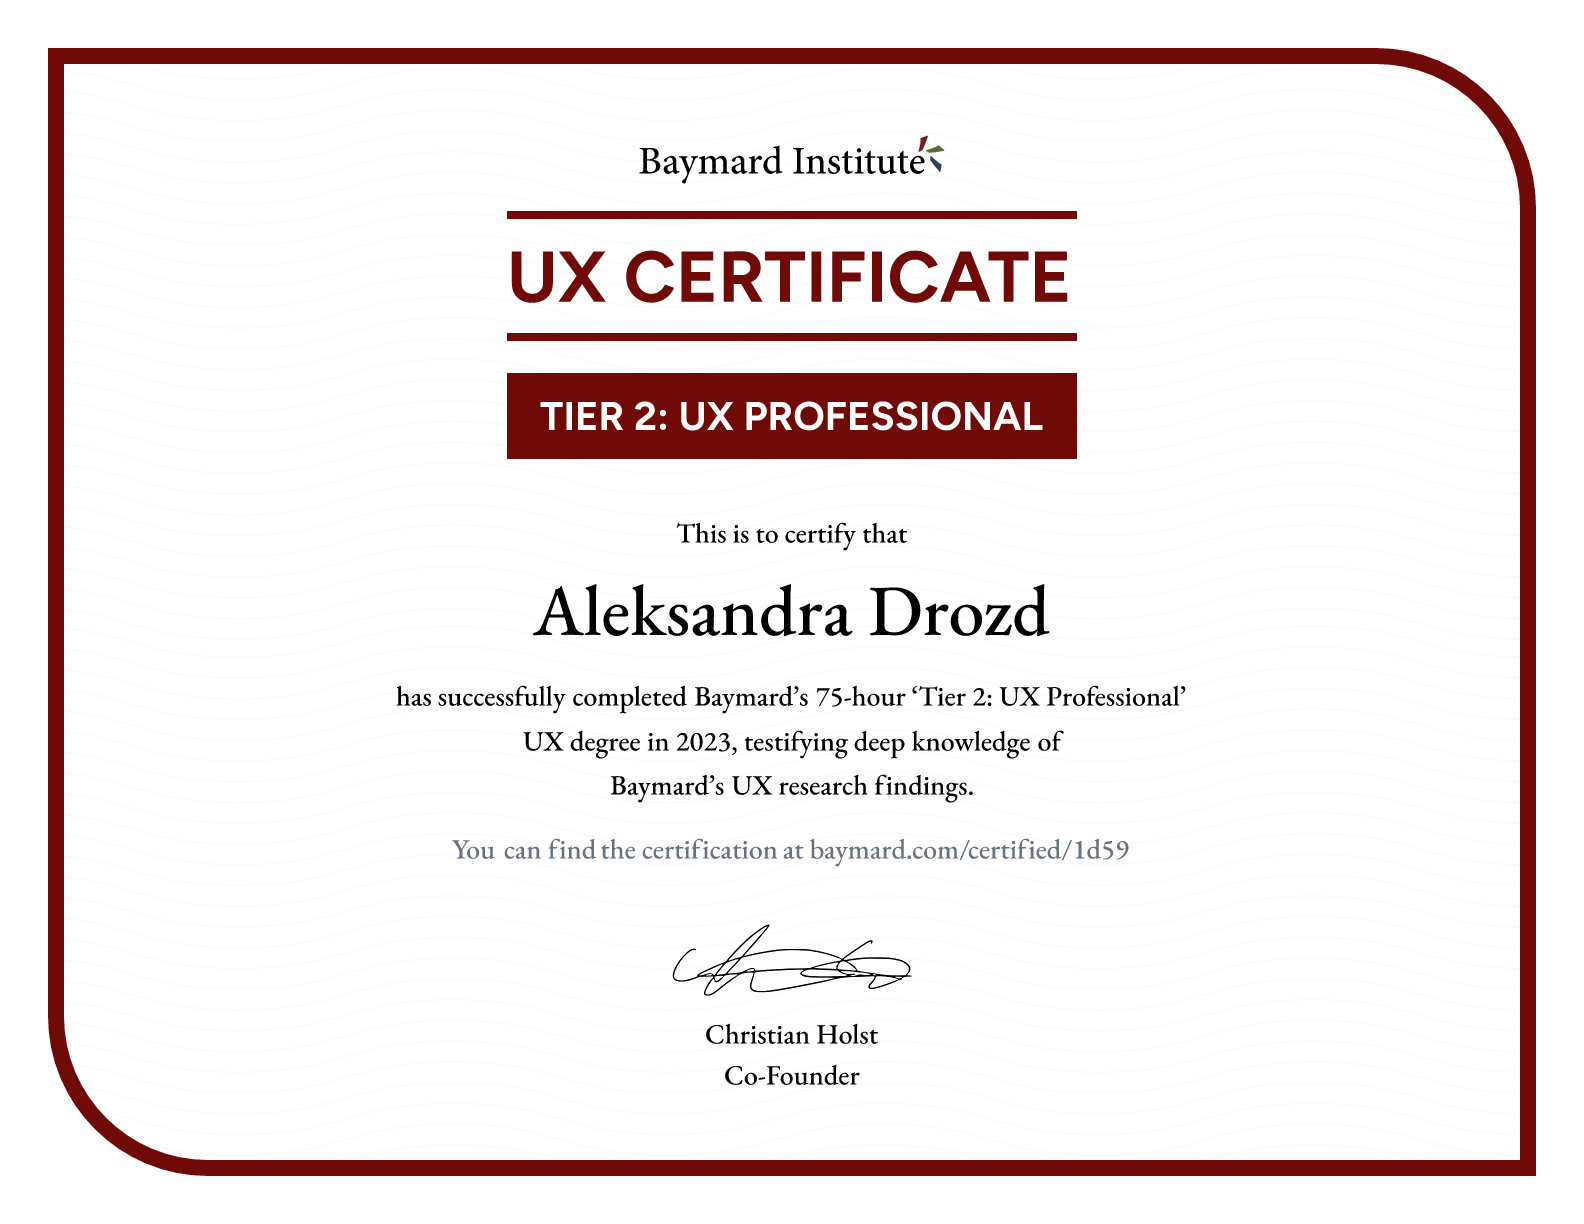 Aleksandra Drozd’s certificate